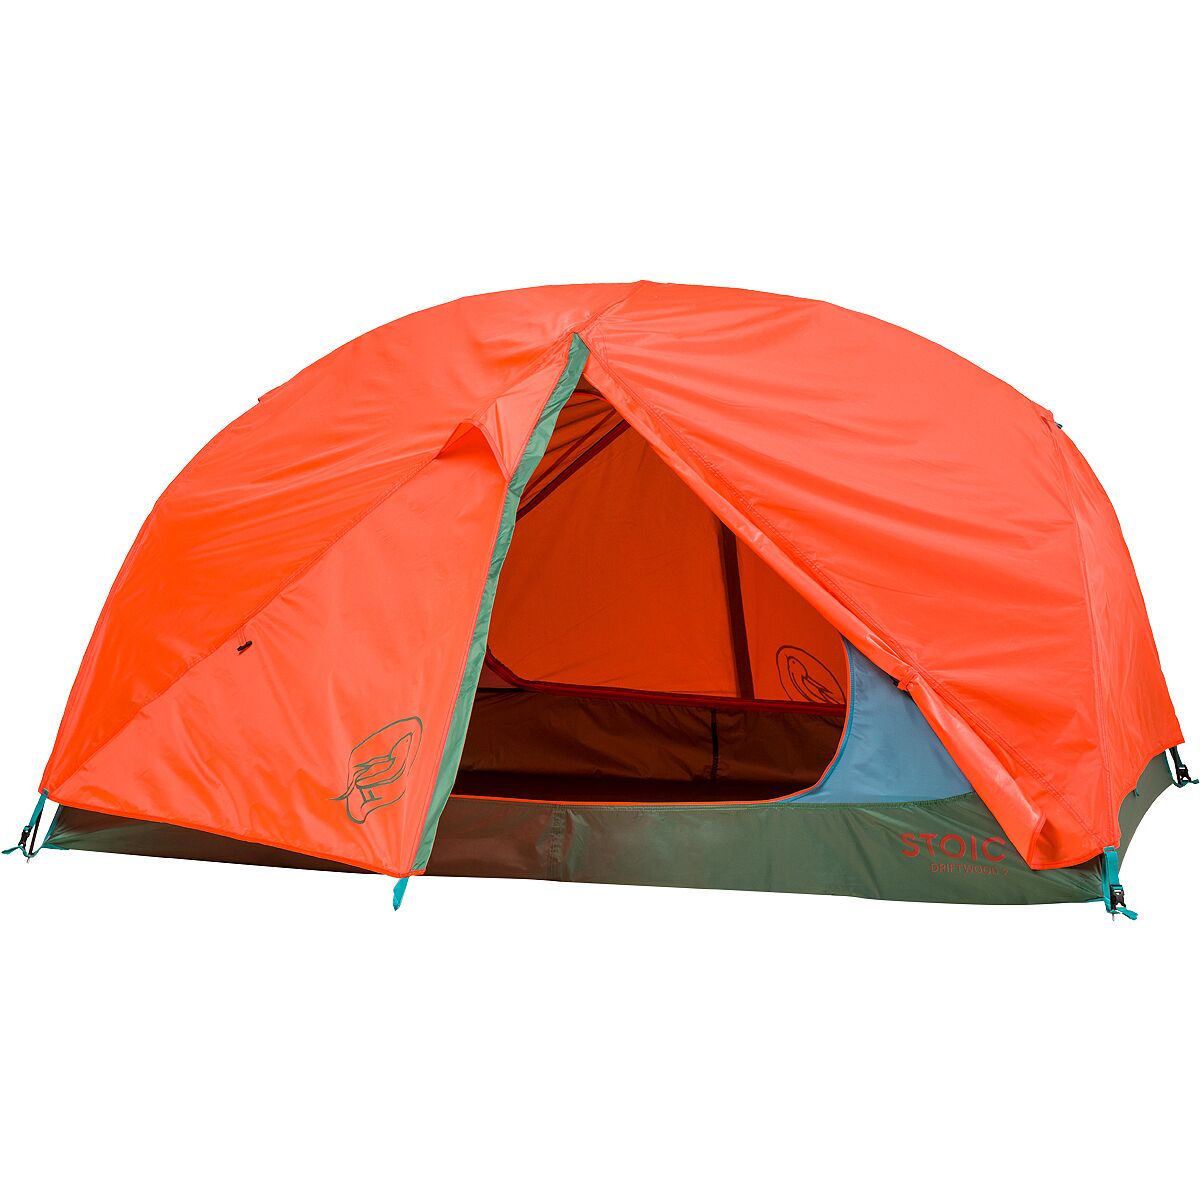 Stoic Driftwood 2 Tent: 2-person 3-season Cherry Peak, One Size